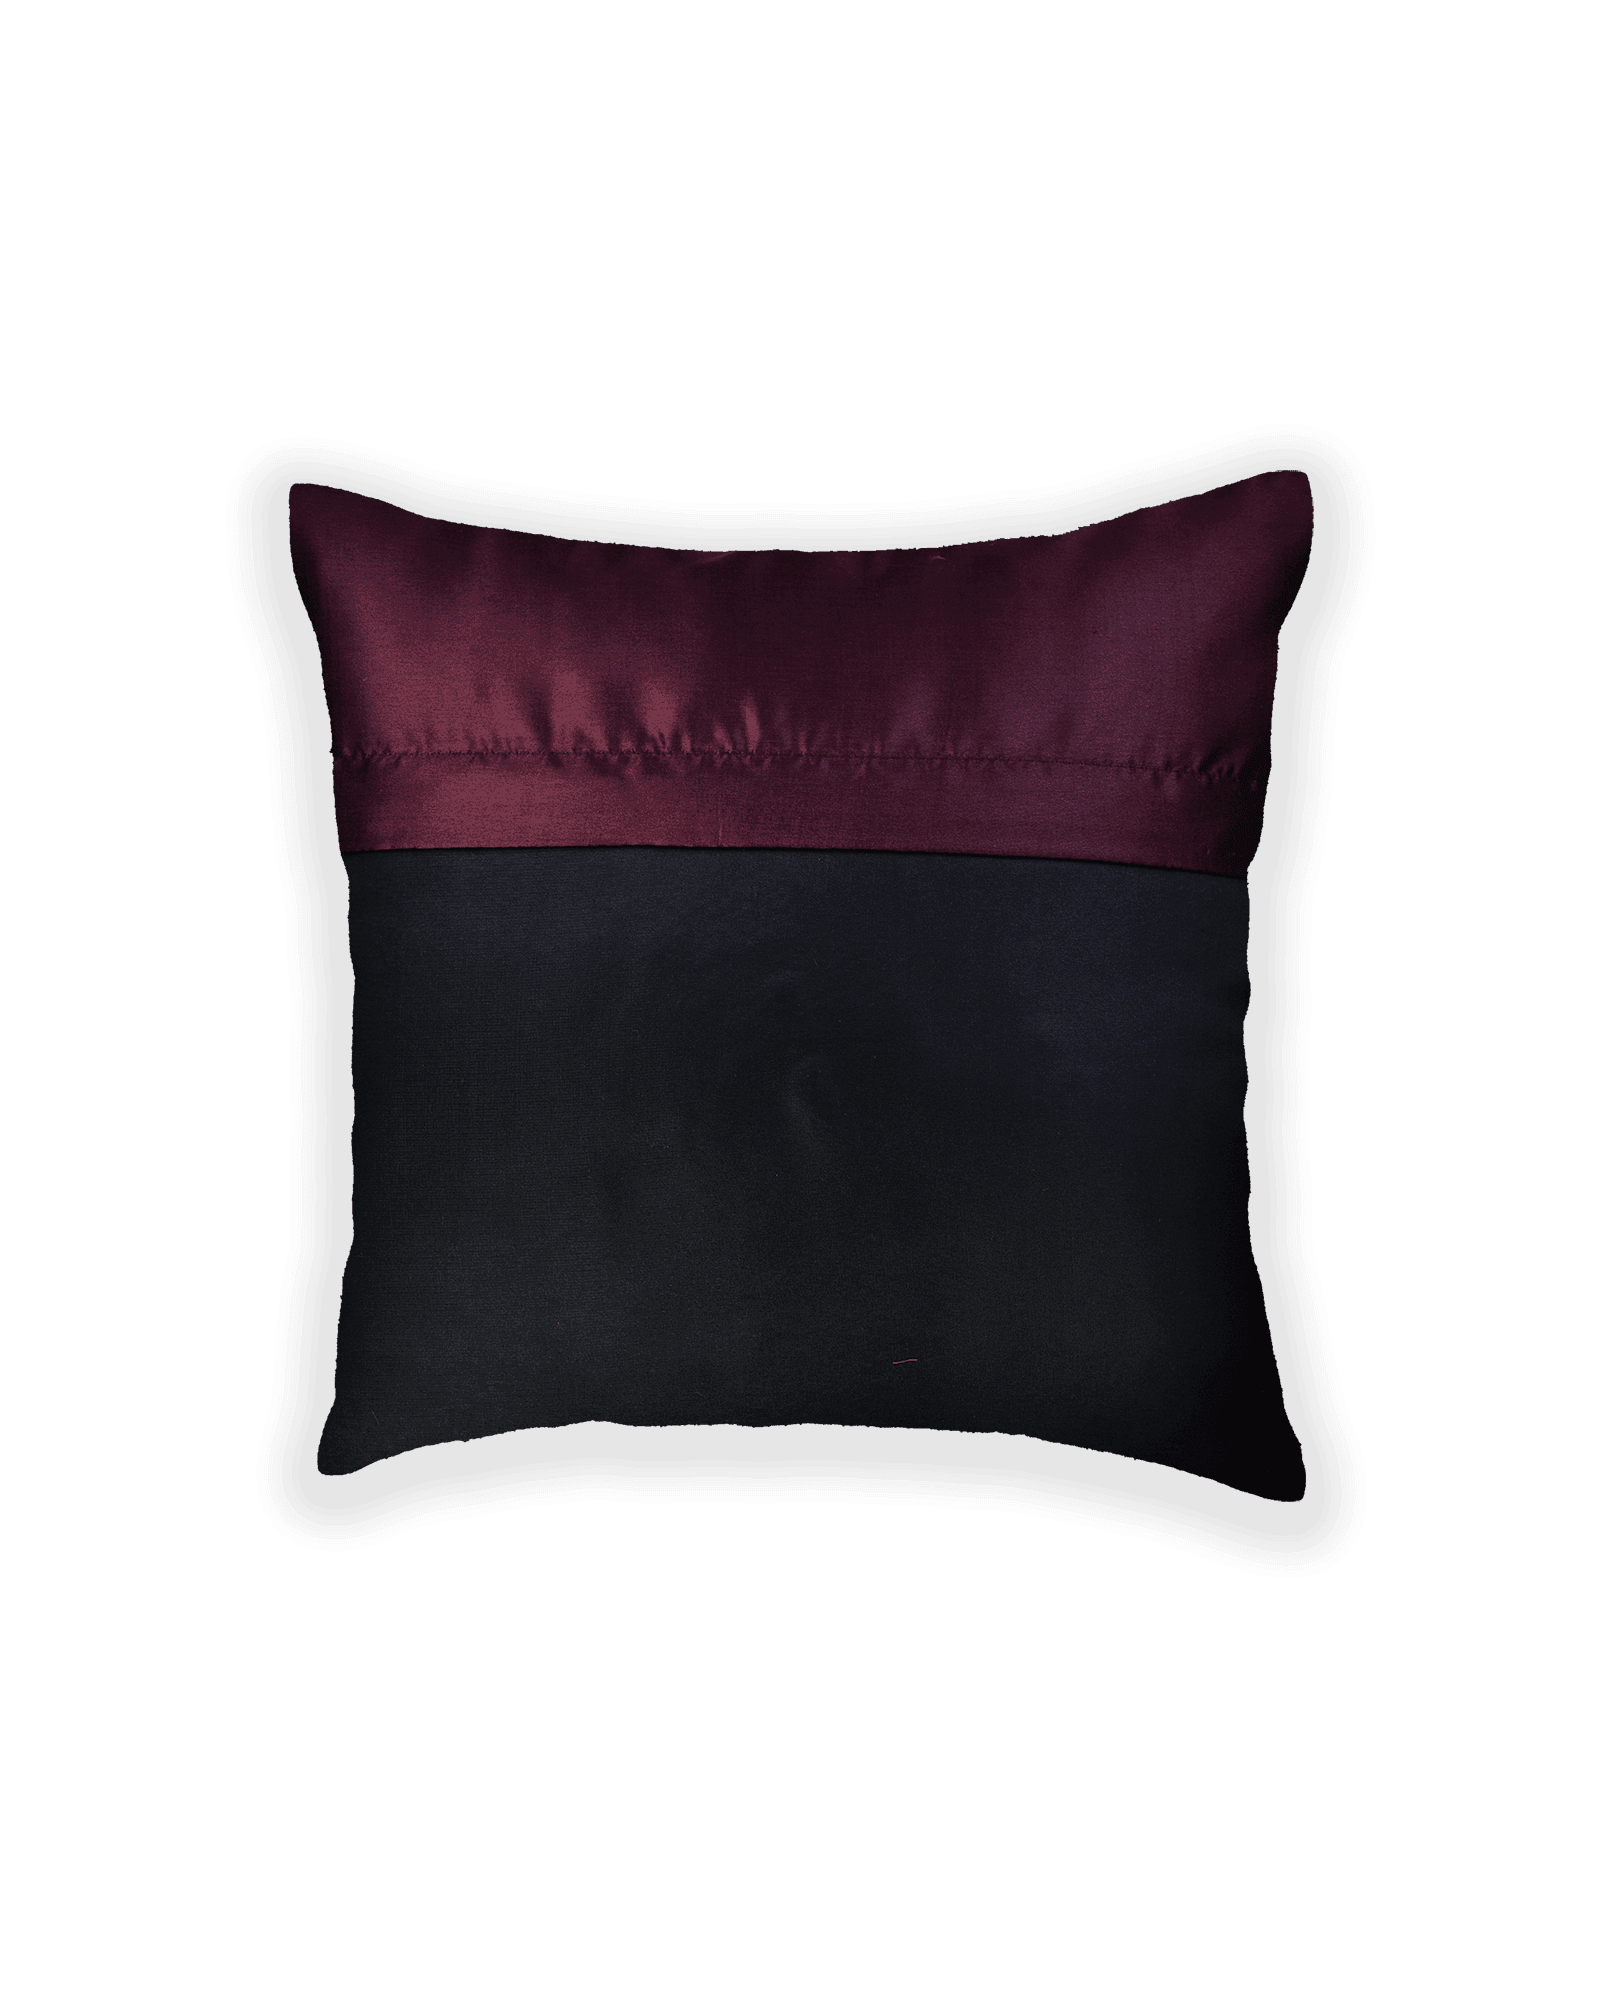 Mahogany Satin Hand-embroidered Poly Silk Cushion Cover 16" - By HolyWeaves, Benares